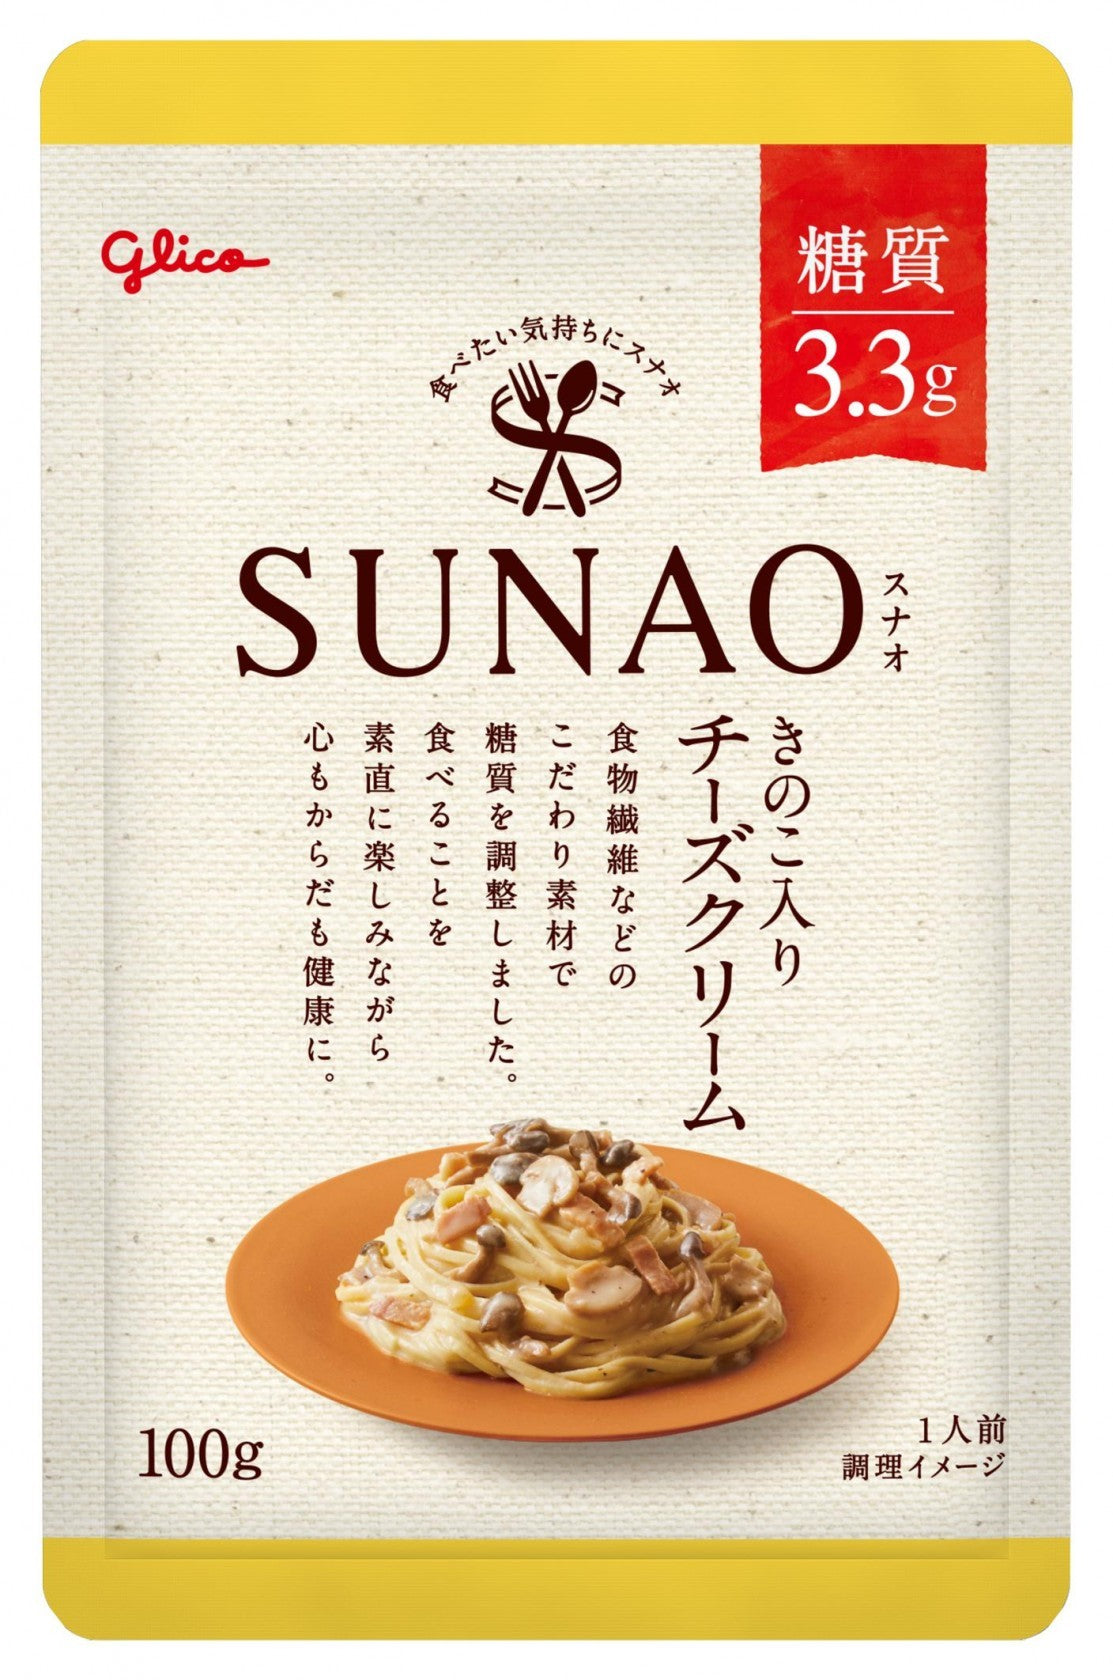 SUNAOパスタ【9食分】特別セット